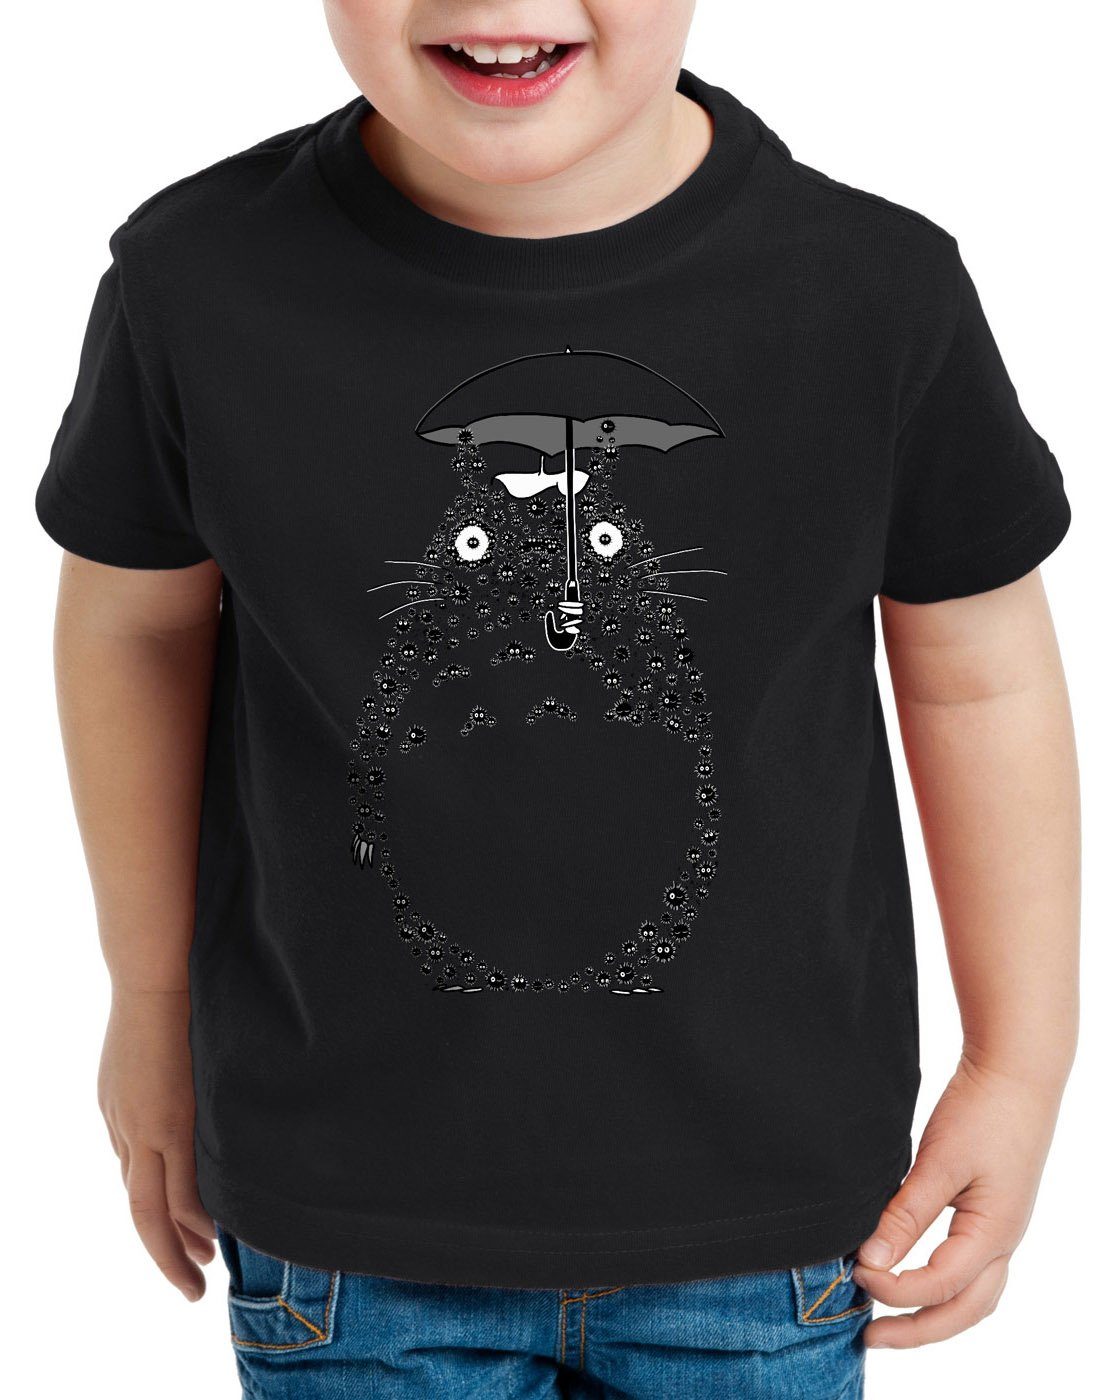 neko mein Totoro tonari Kinder anime Russmännchen nachbar Print-Shirt no T-Shirt style3